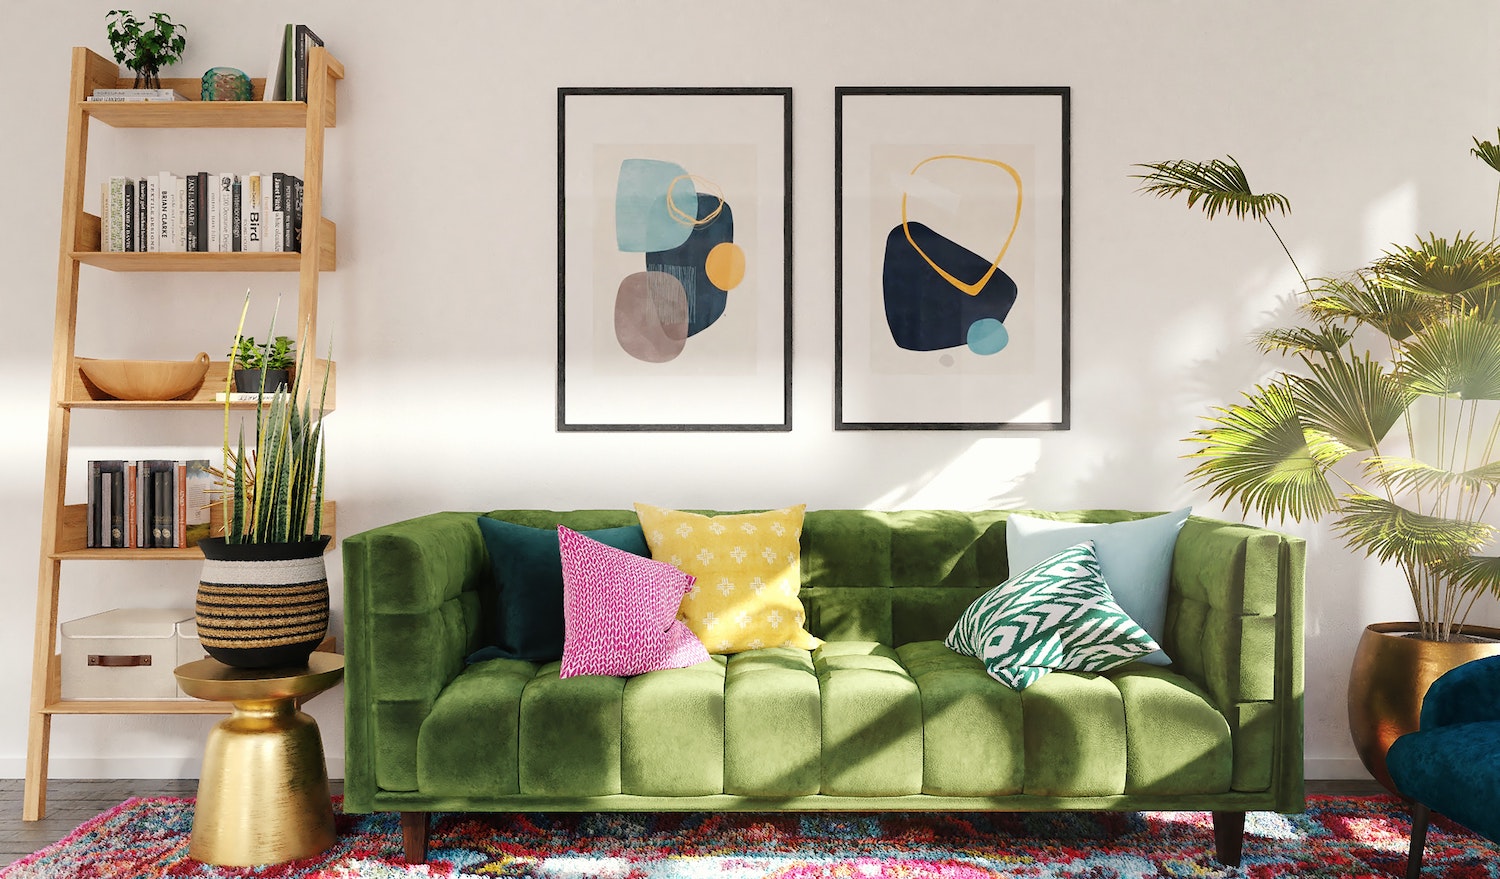 Modern living room couch interior design, applecross